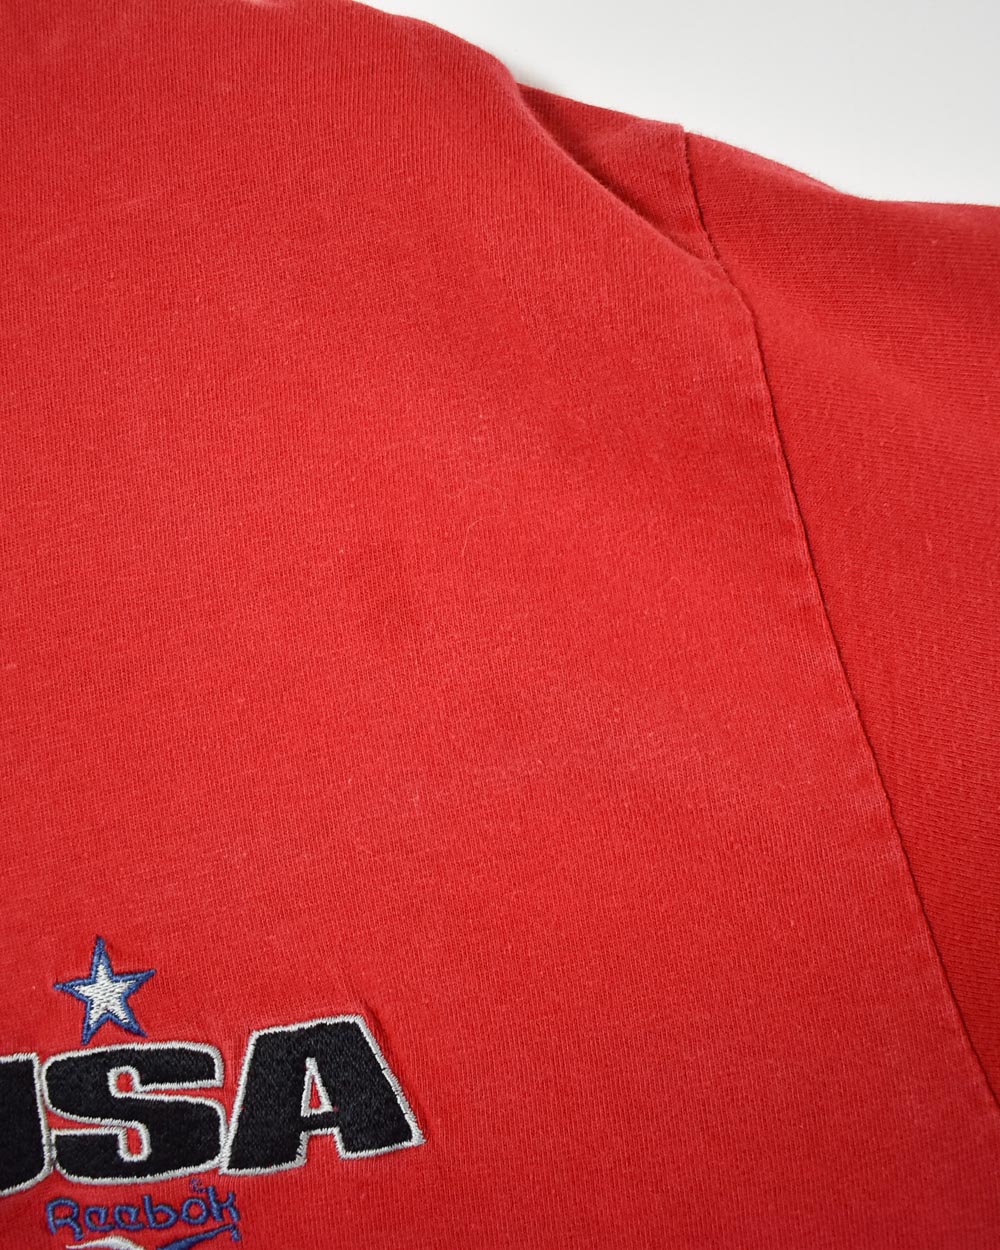 Red Reebok USA T-Shirt - X-Large